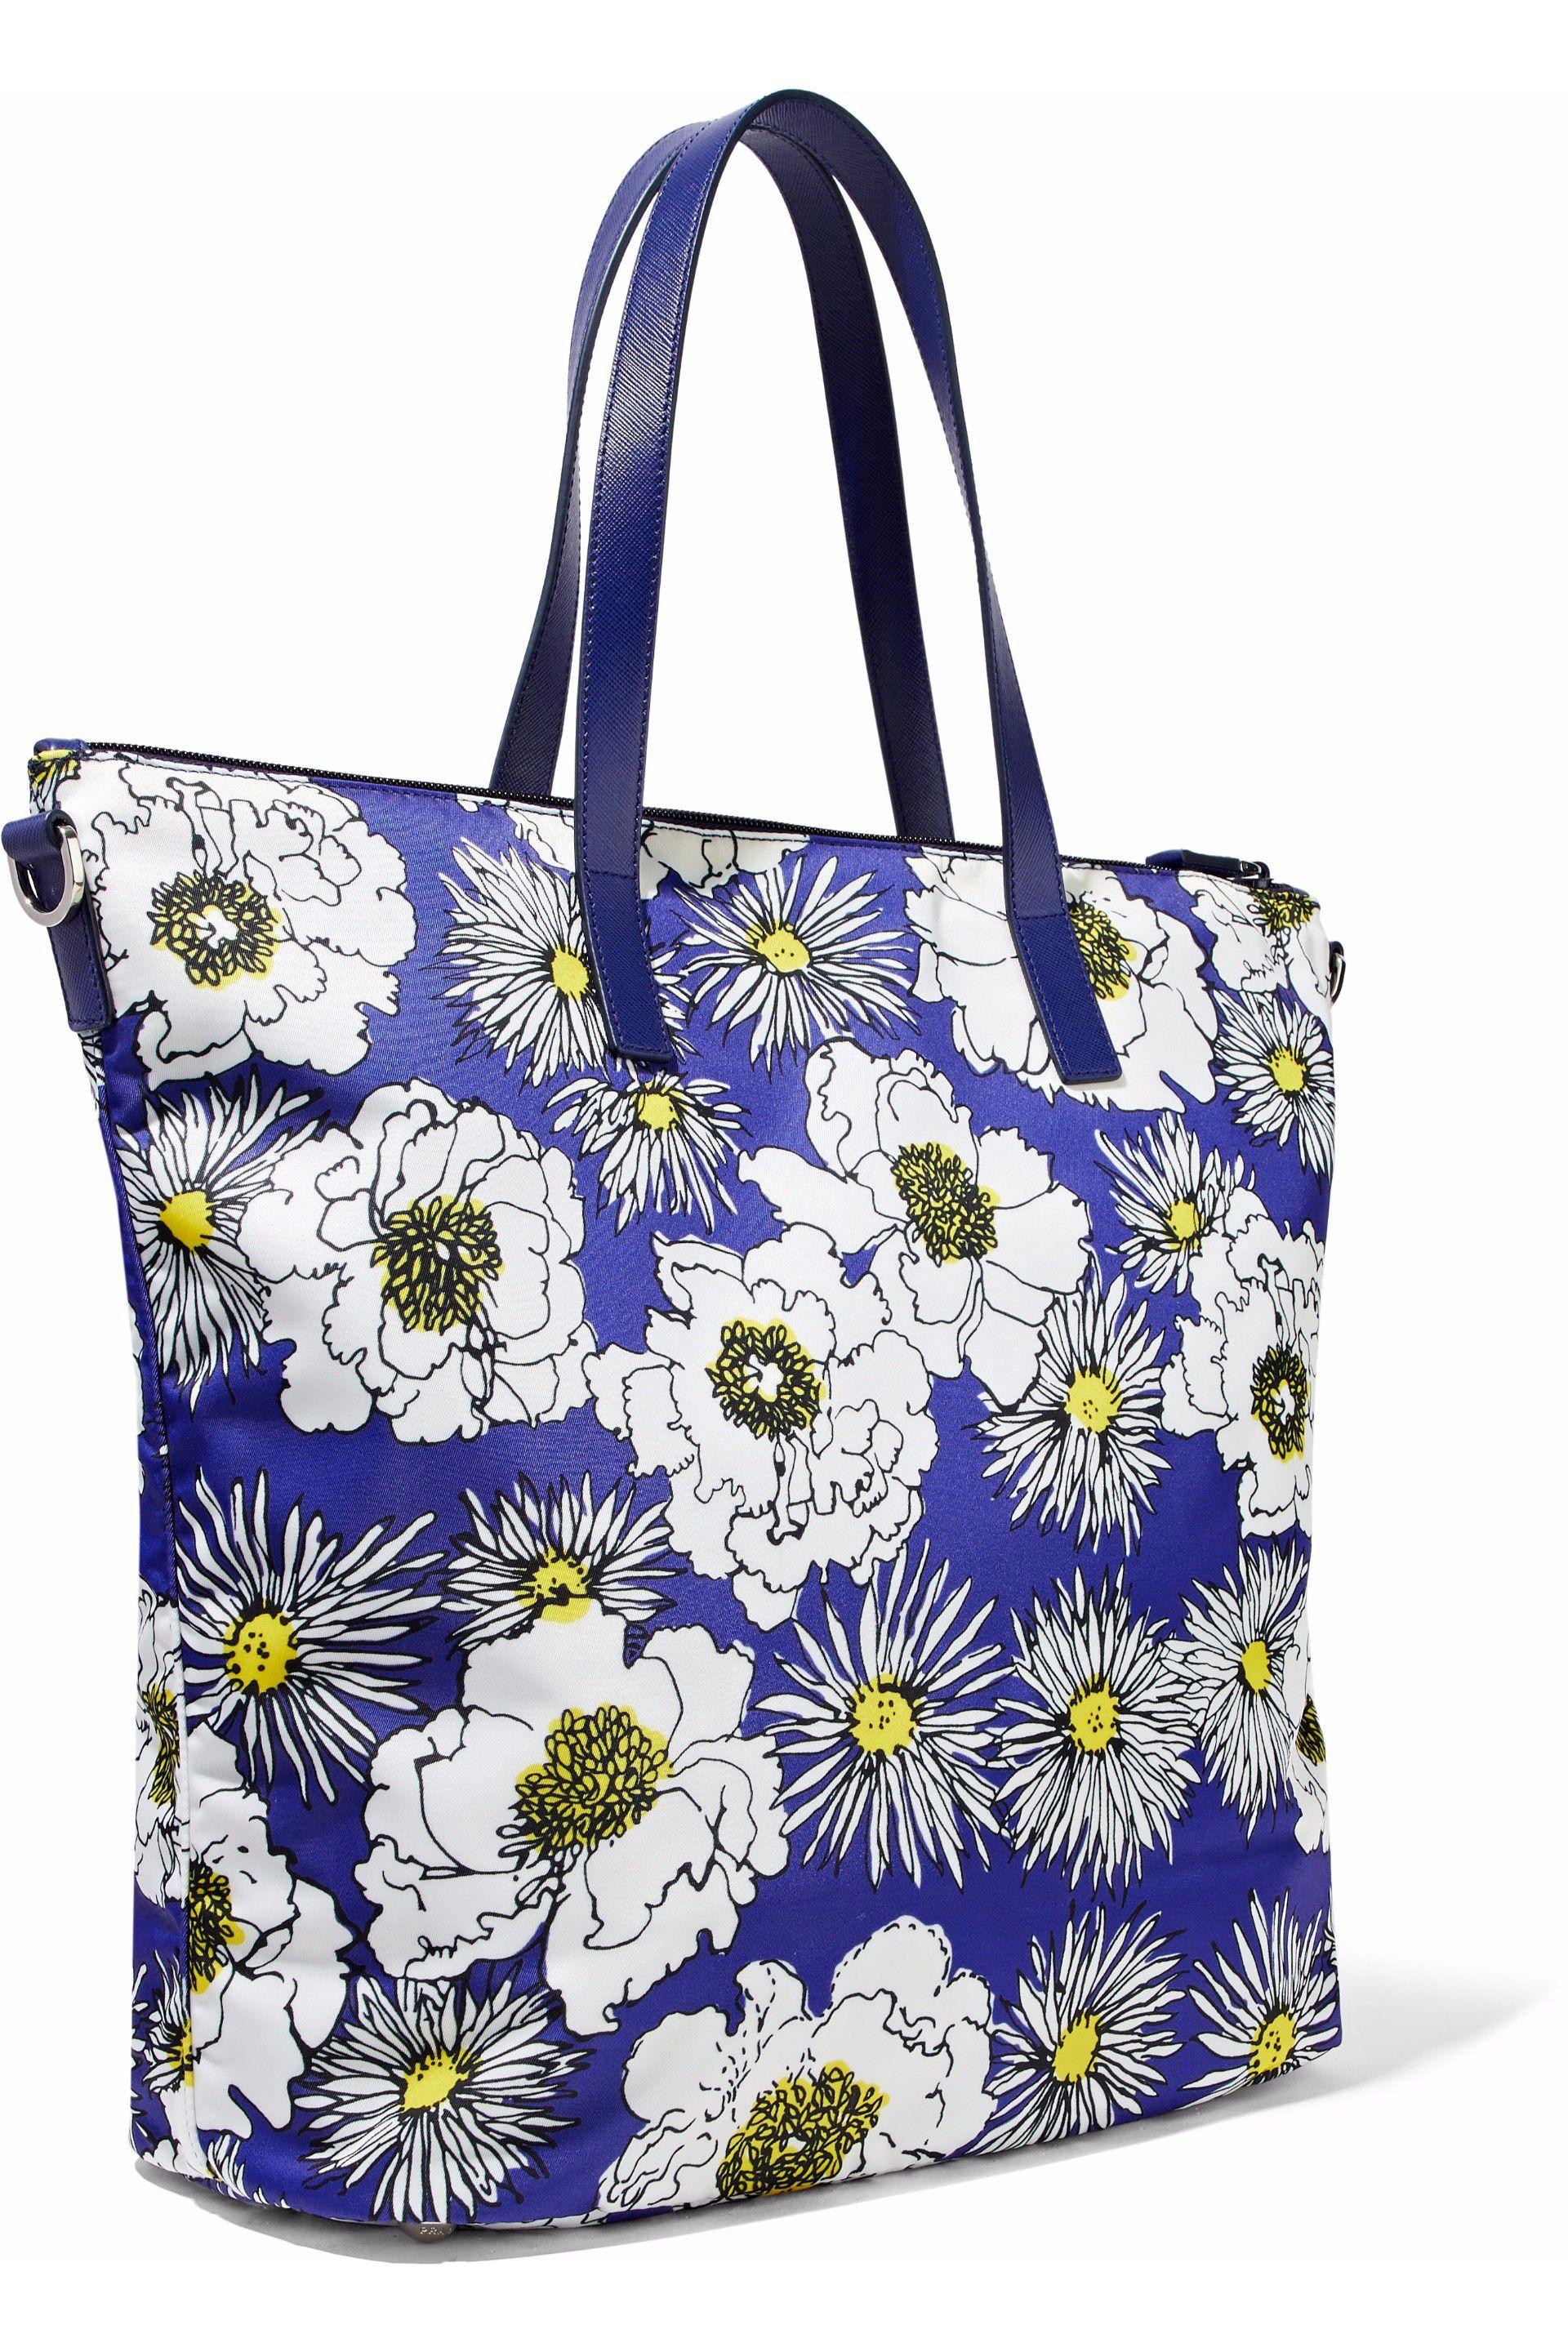 Prada Leather Floral Tote Bag in Blue Floral (Blue) | Lyst